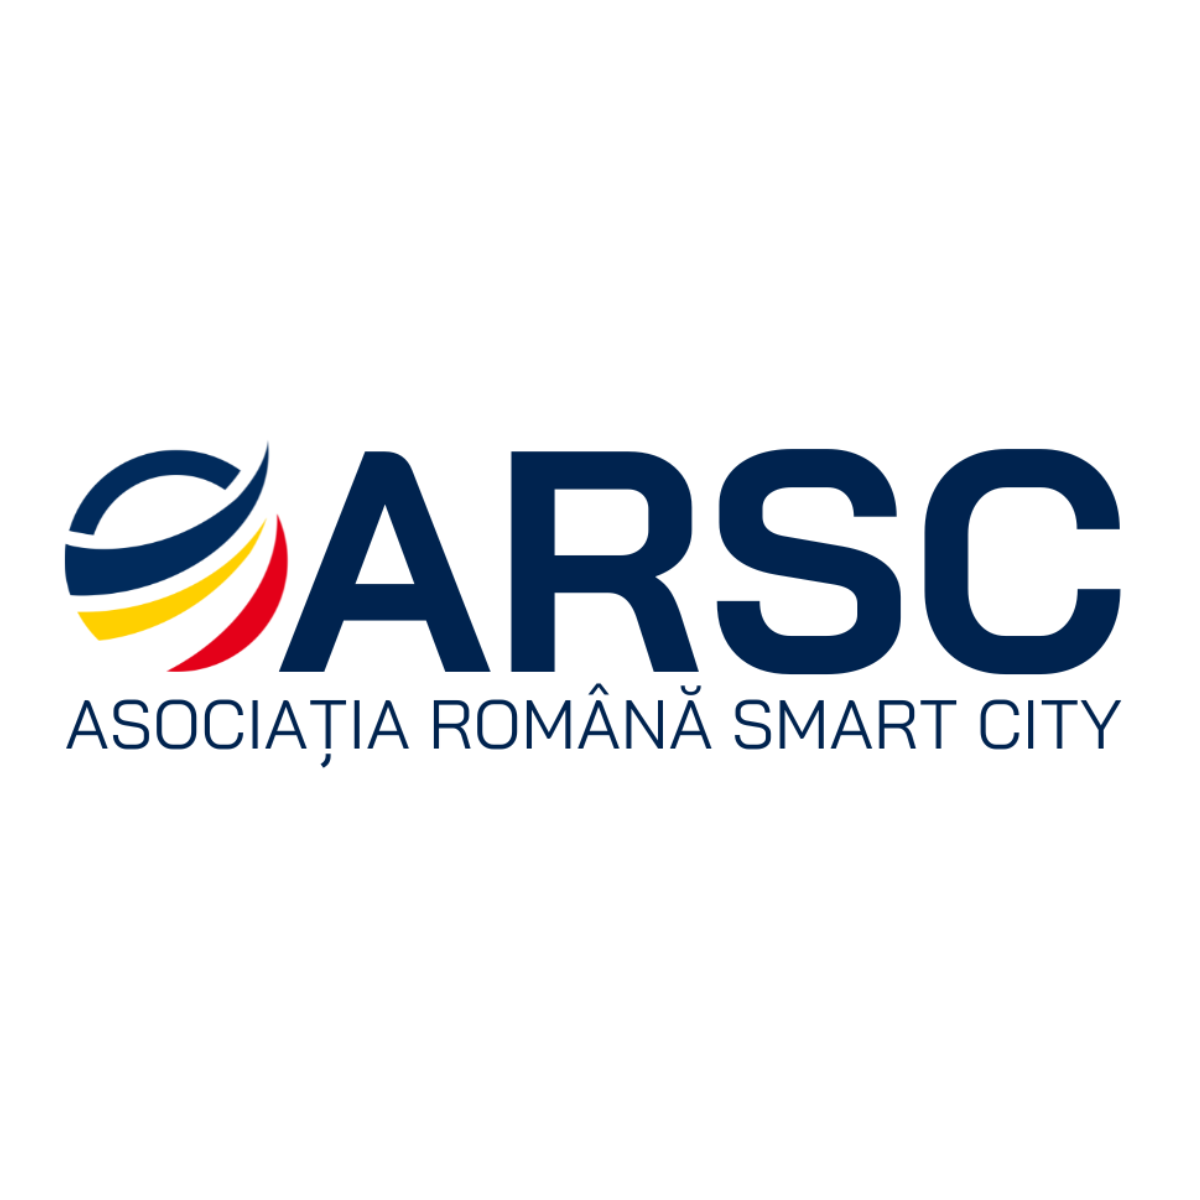 Romanian Association for Smart City